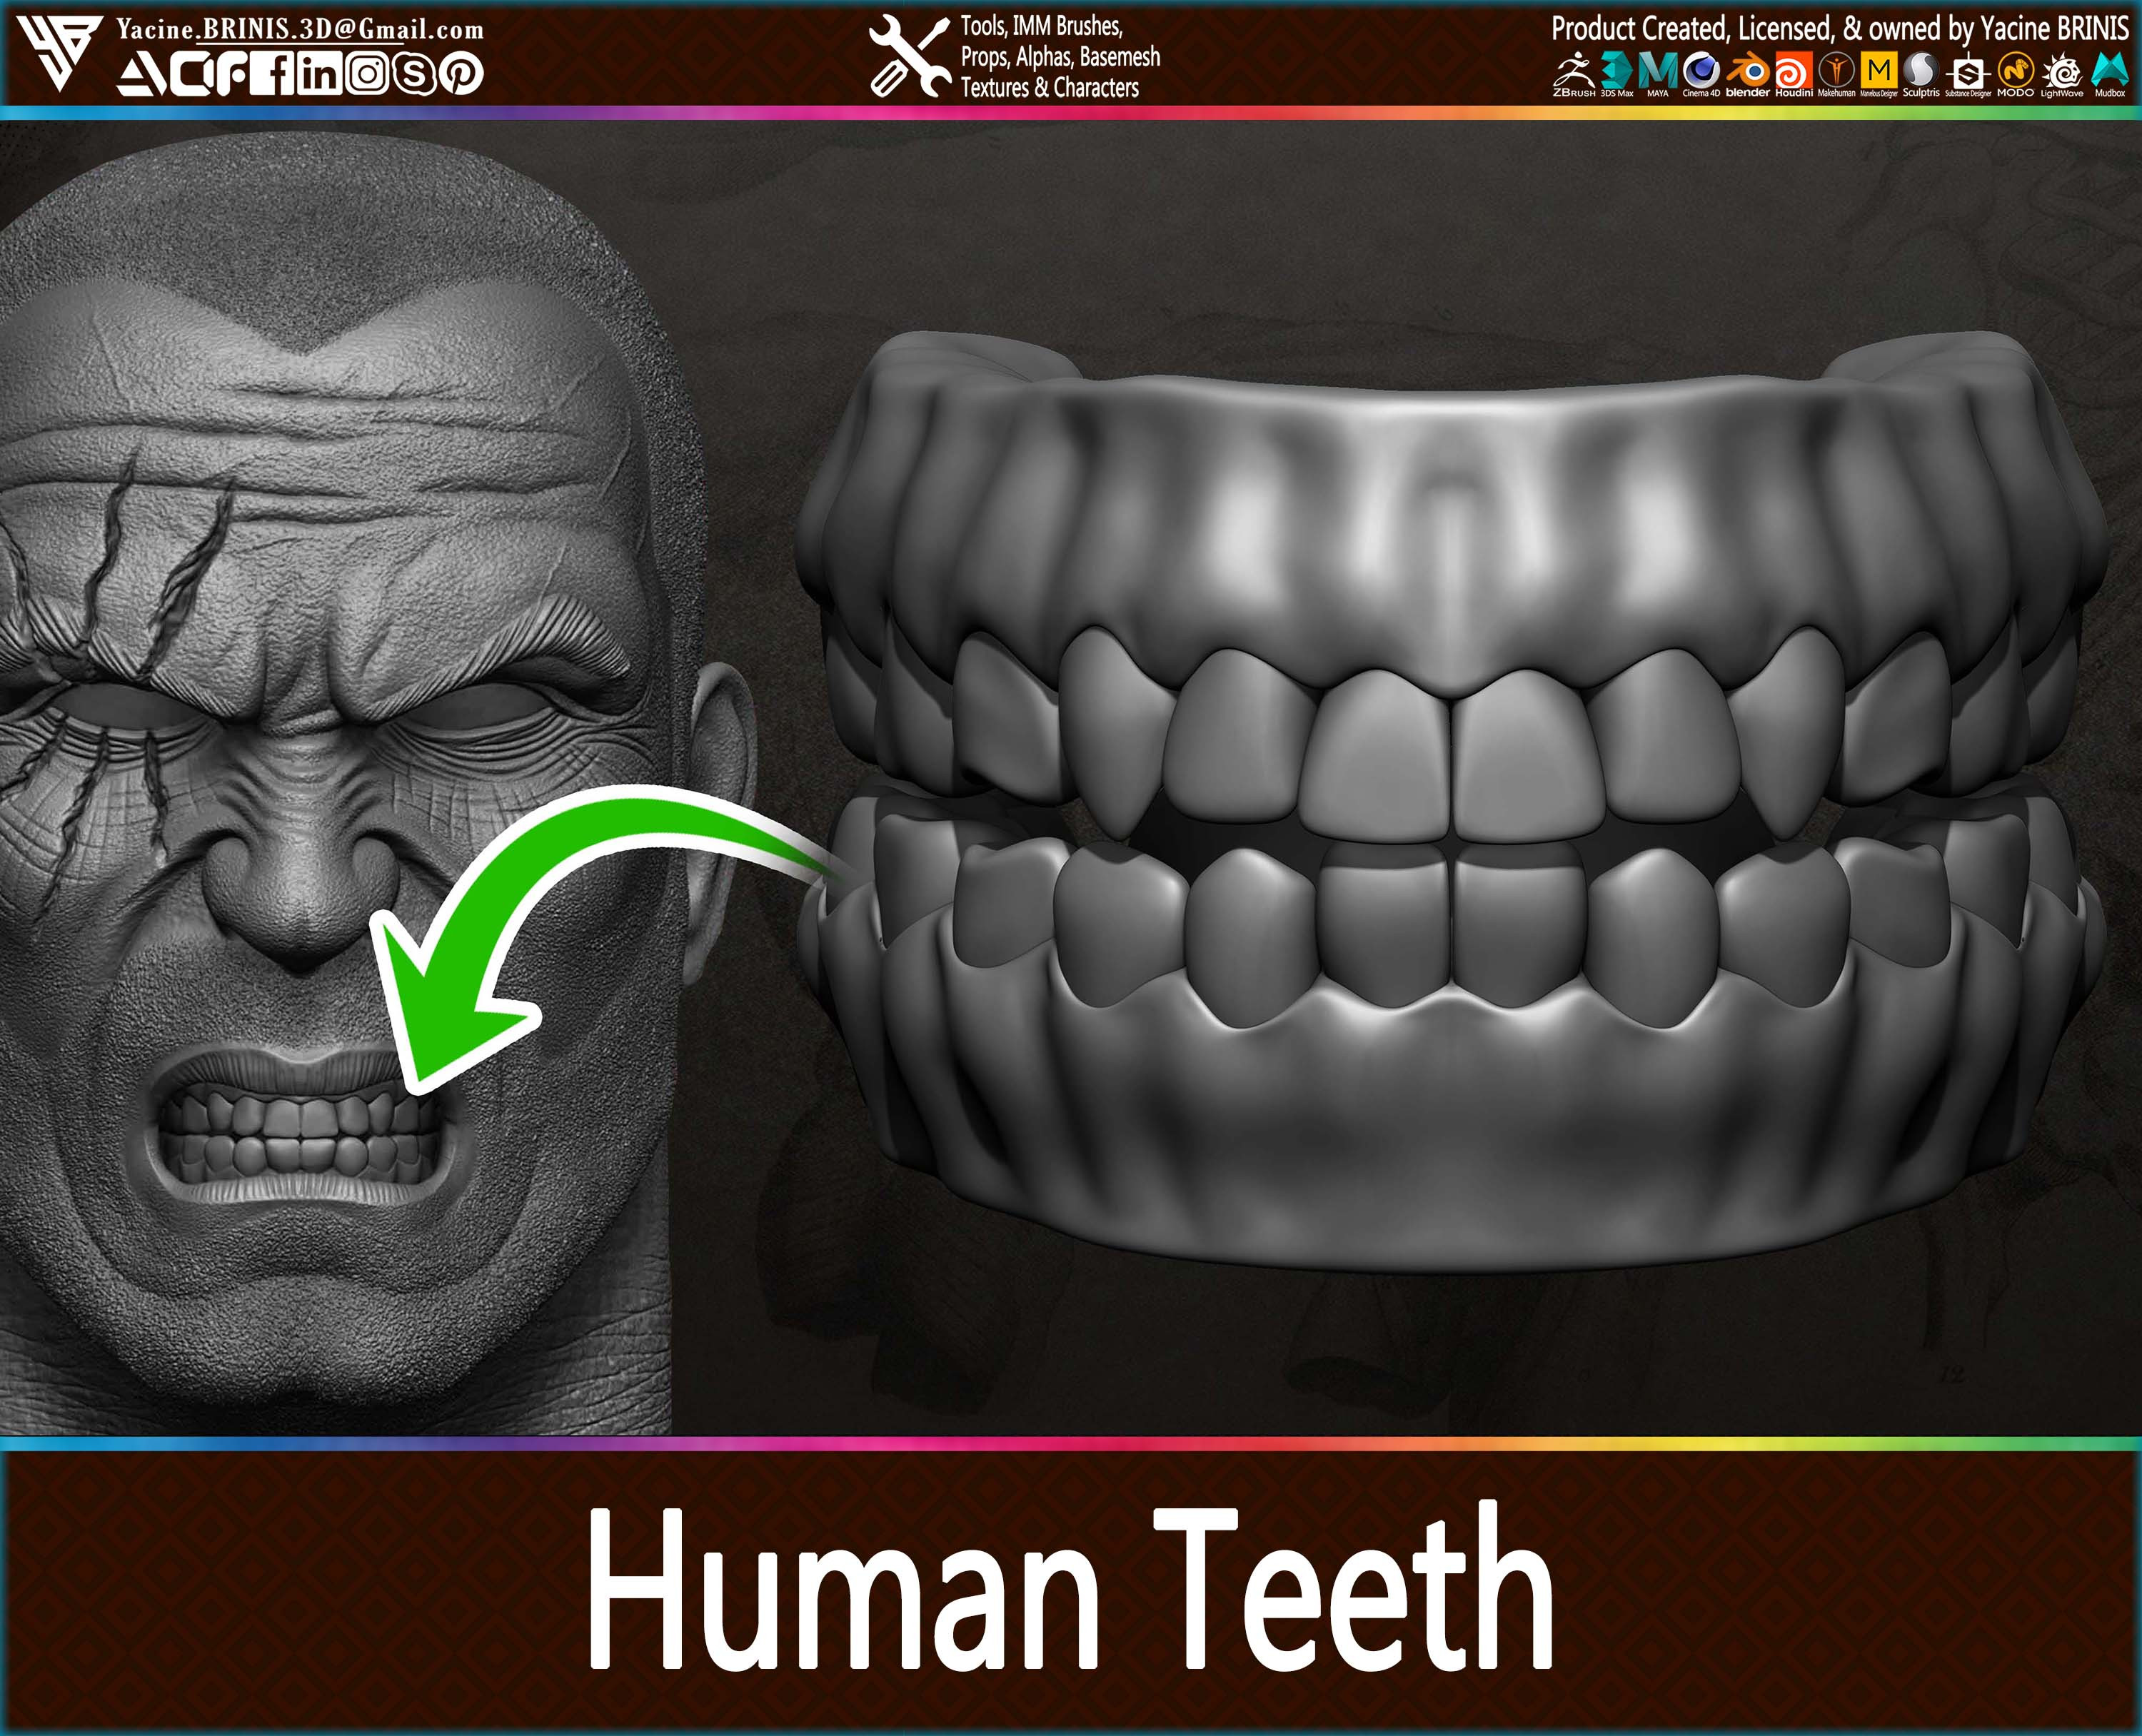 Highly Detailed Human Teeth sculpted by Yacine BRINIS 005